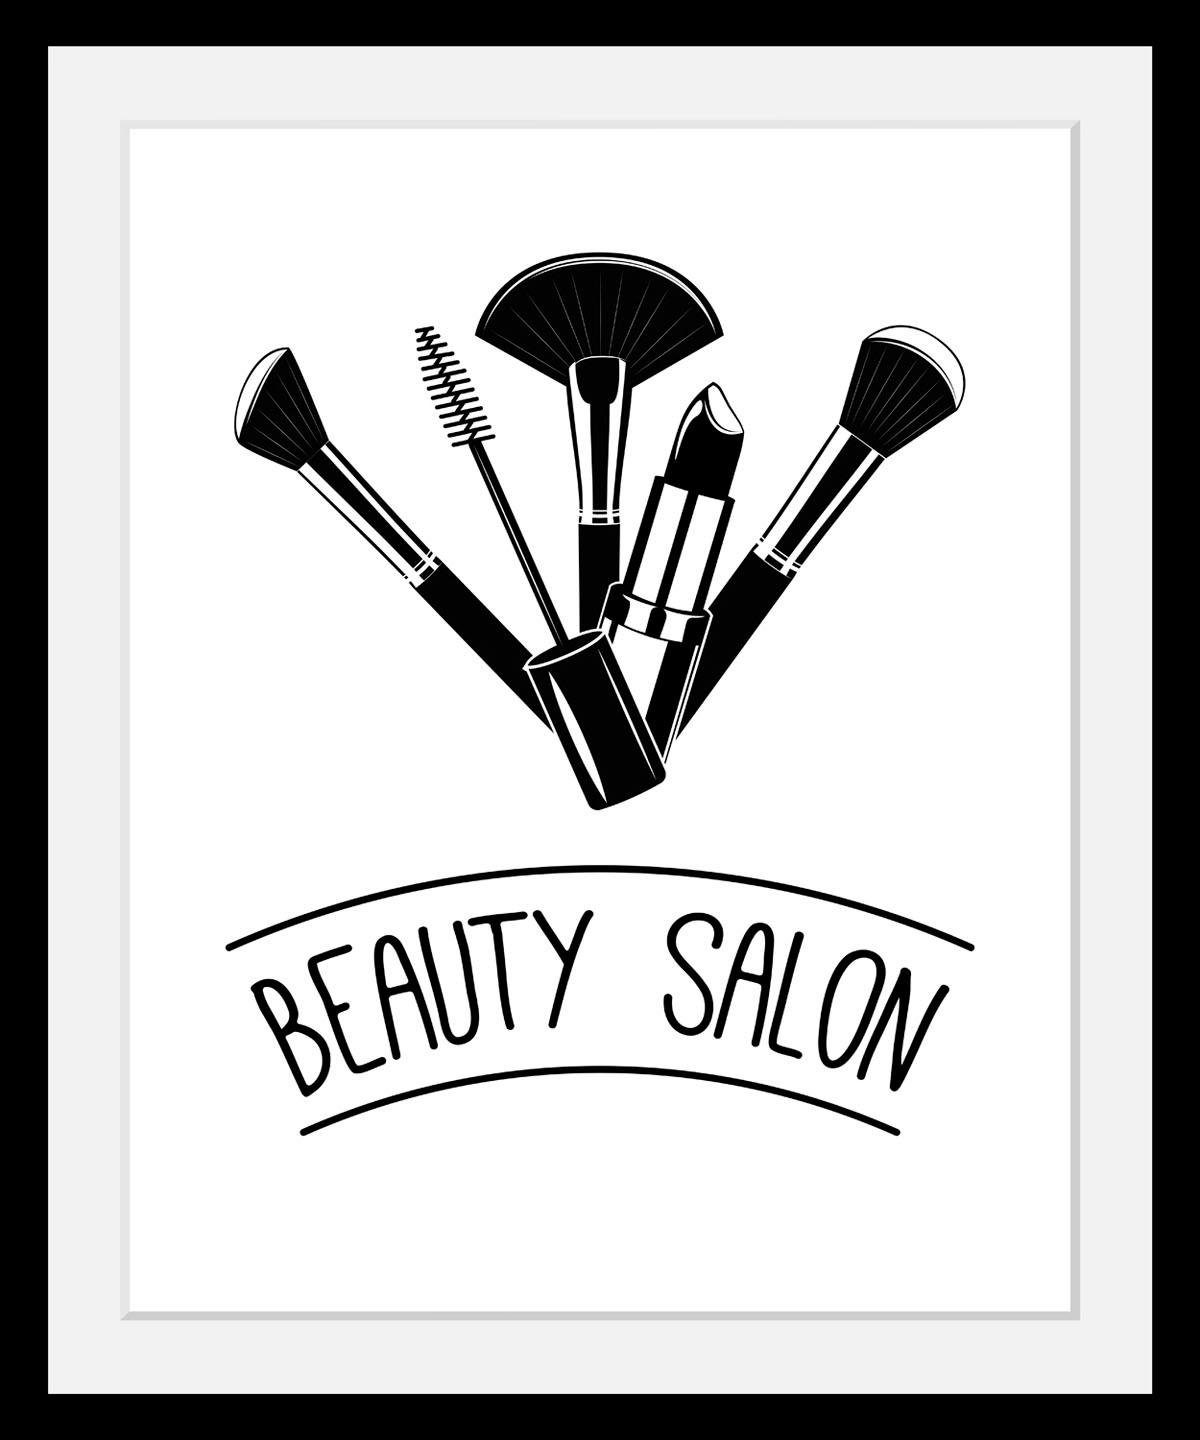 queence Bild Beauty Salon, in 3 Größen, gerahmt